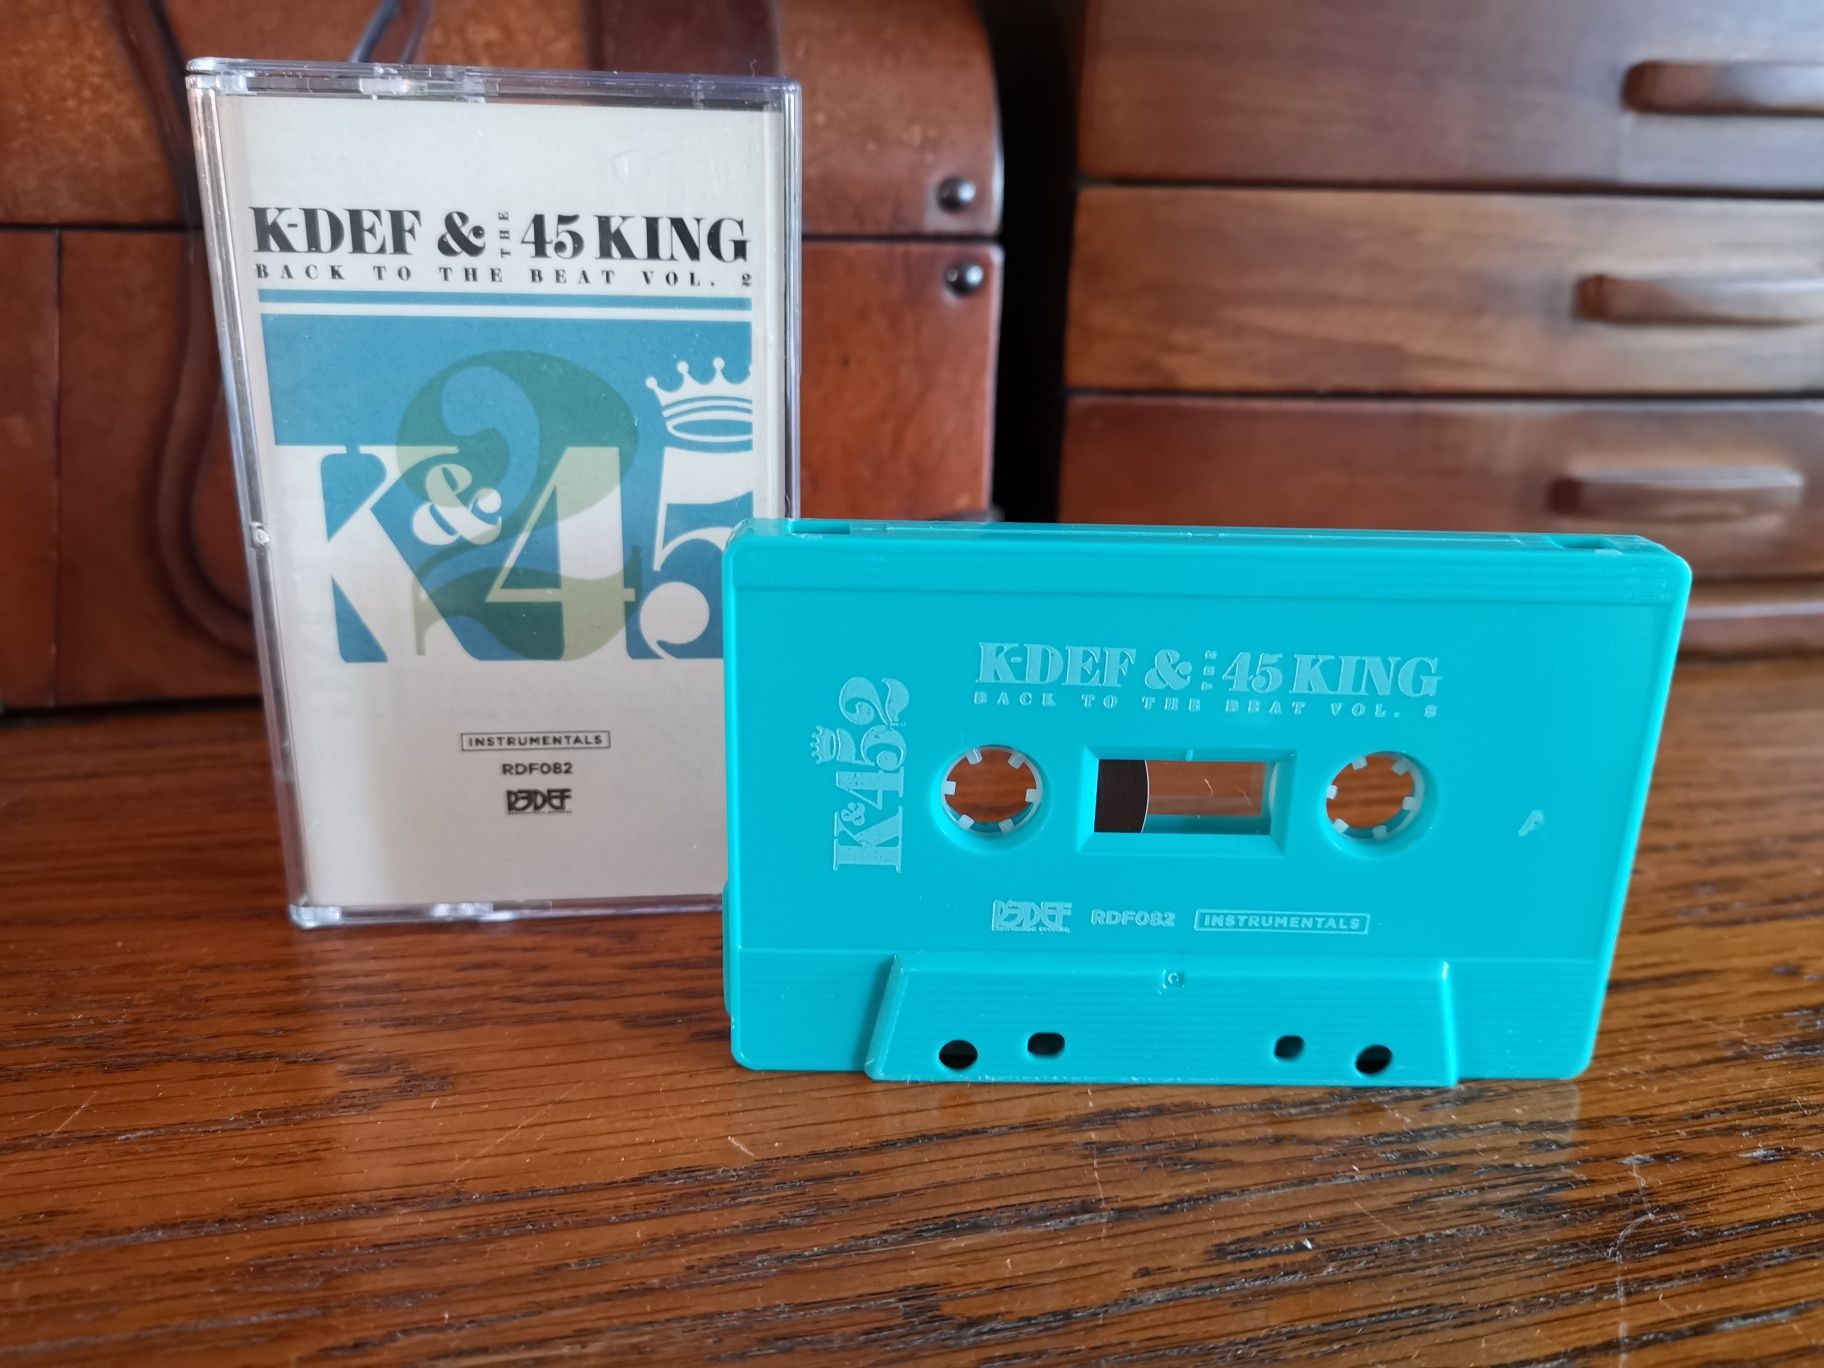 K-DEF & THE 45 KING - BACK TO THE BEAT VOL. 2 kaseta beattape hiphop
B